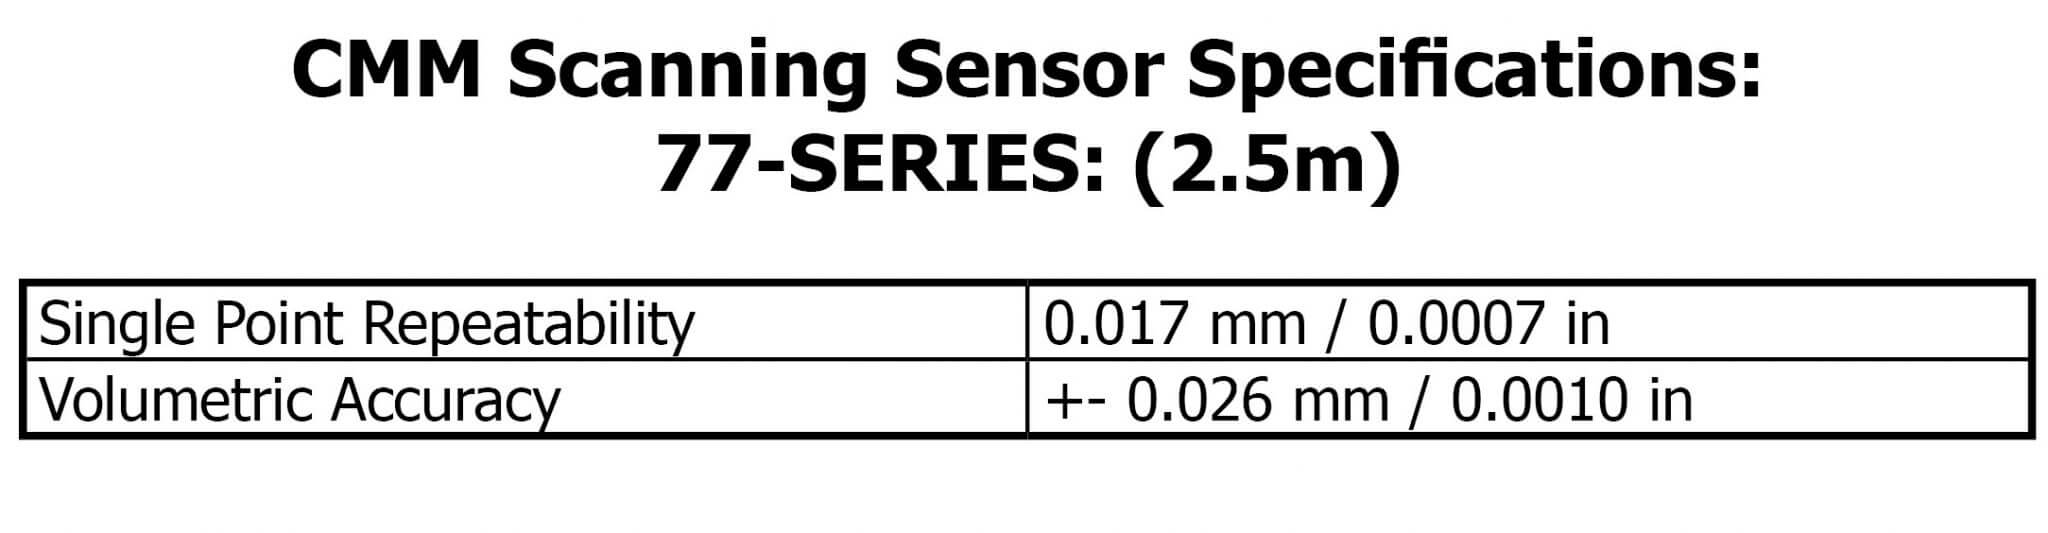 cmm scanning sensor spec